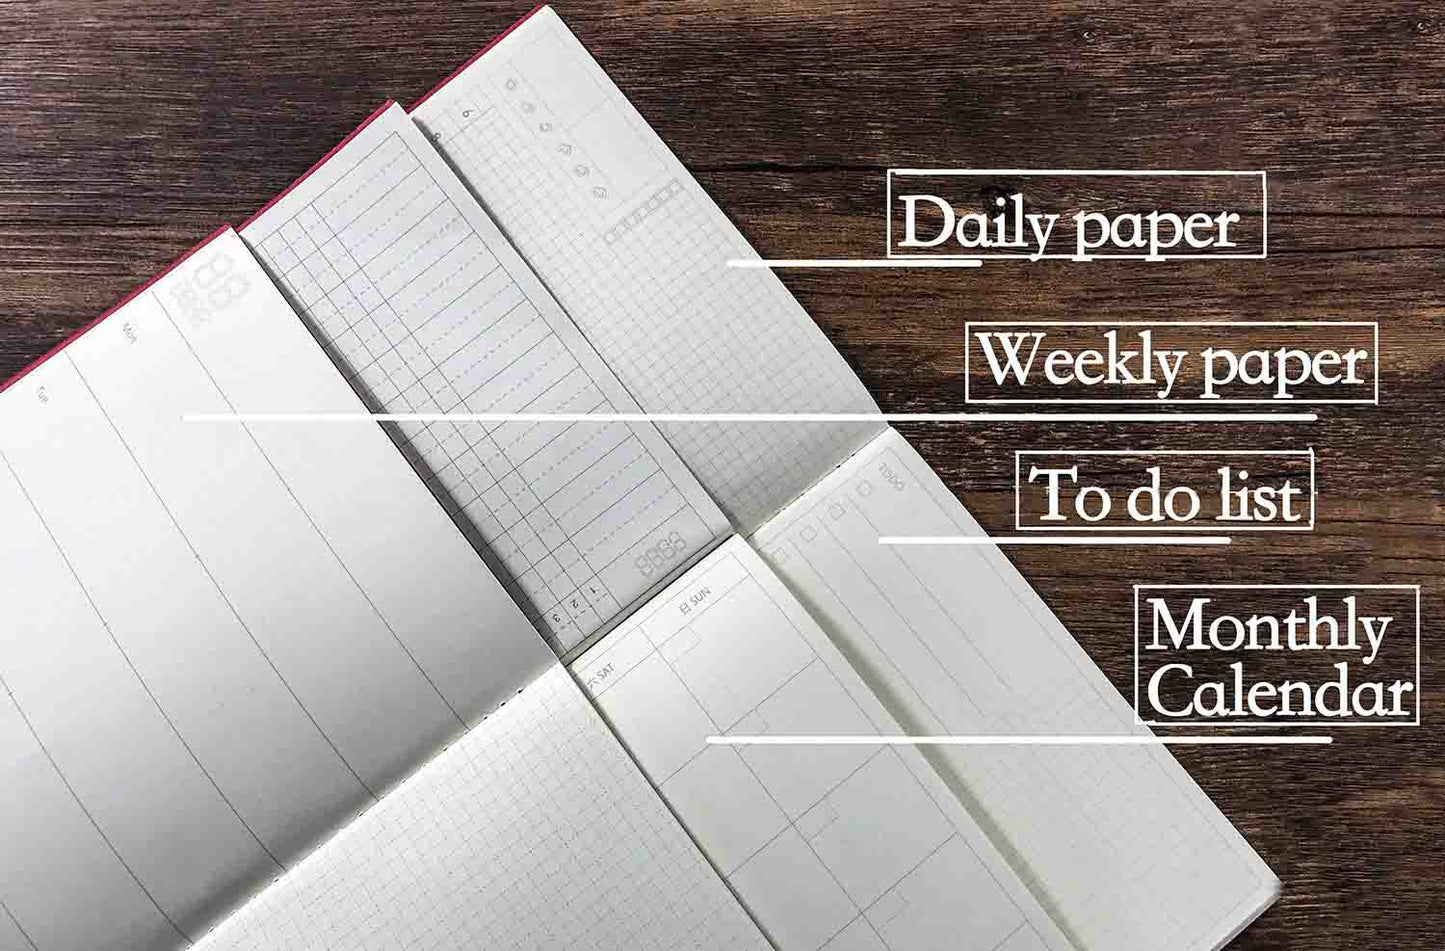 A5 Budget Planner Organizer, Journal Notebook, Achieve Goals - Improve Productivity